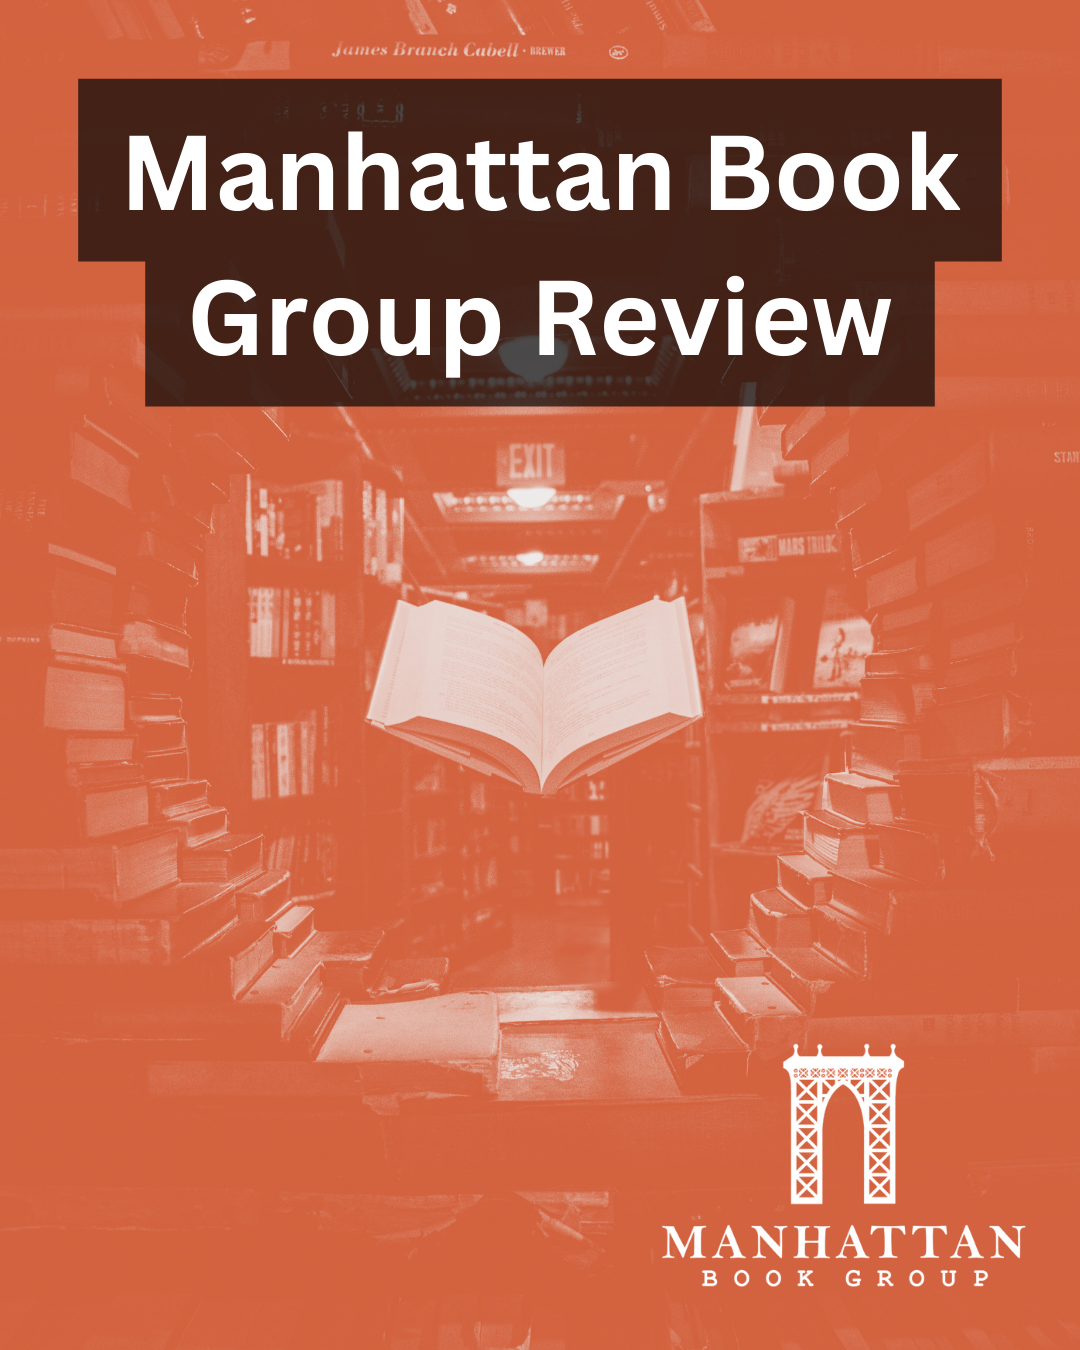 Manhattan Book Group Publisher